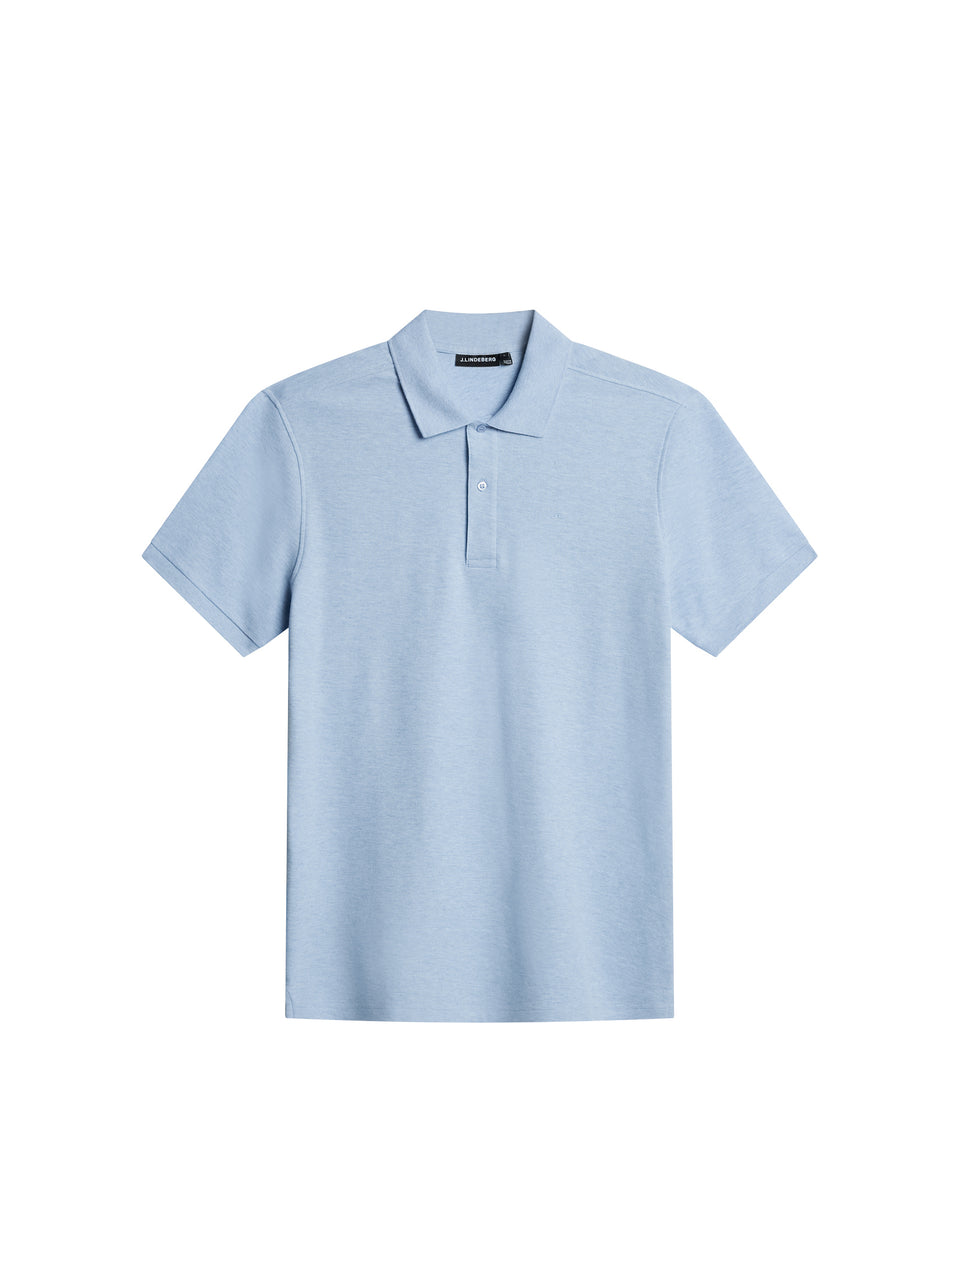 Troy Polo Shirt / Chambray Blue Melange